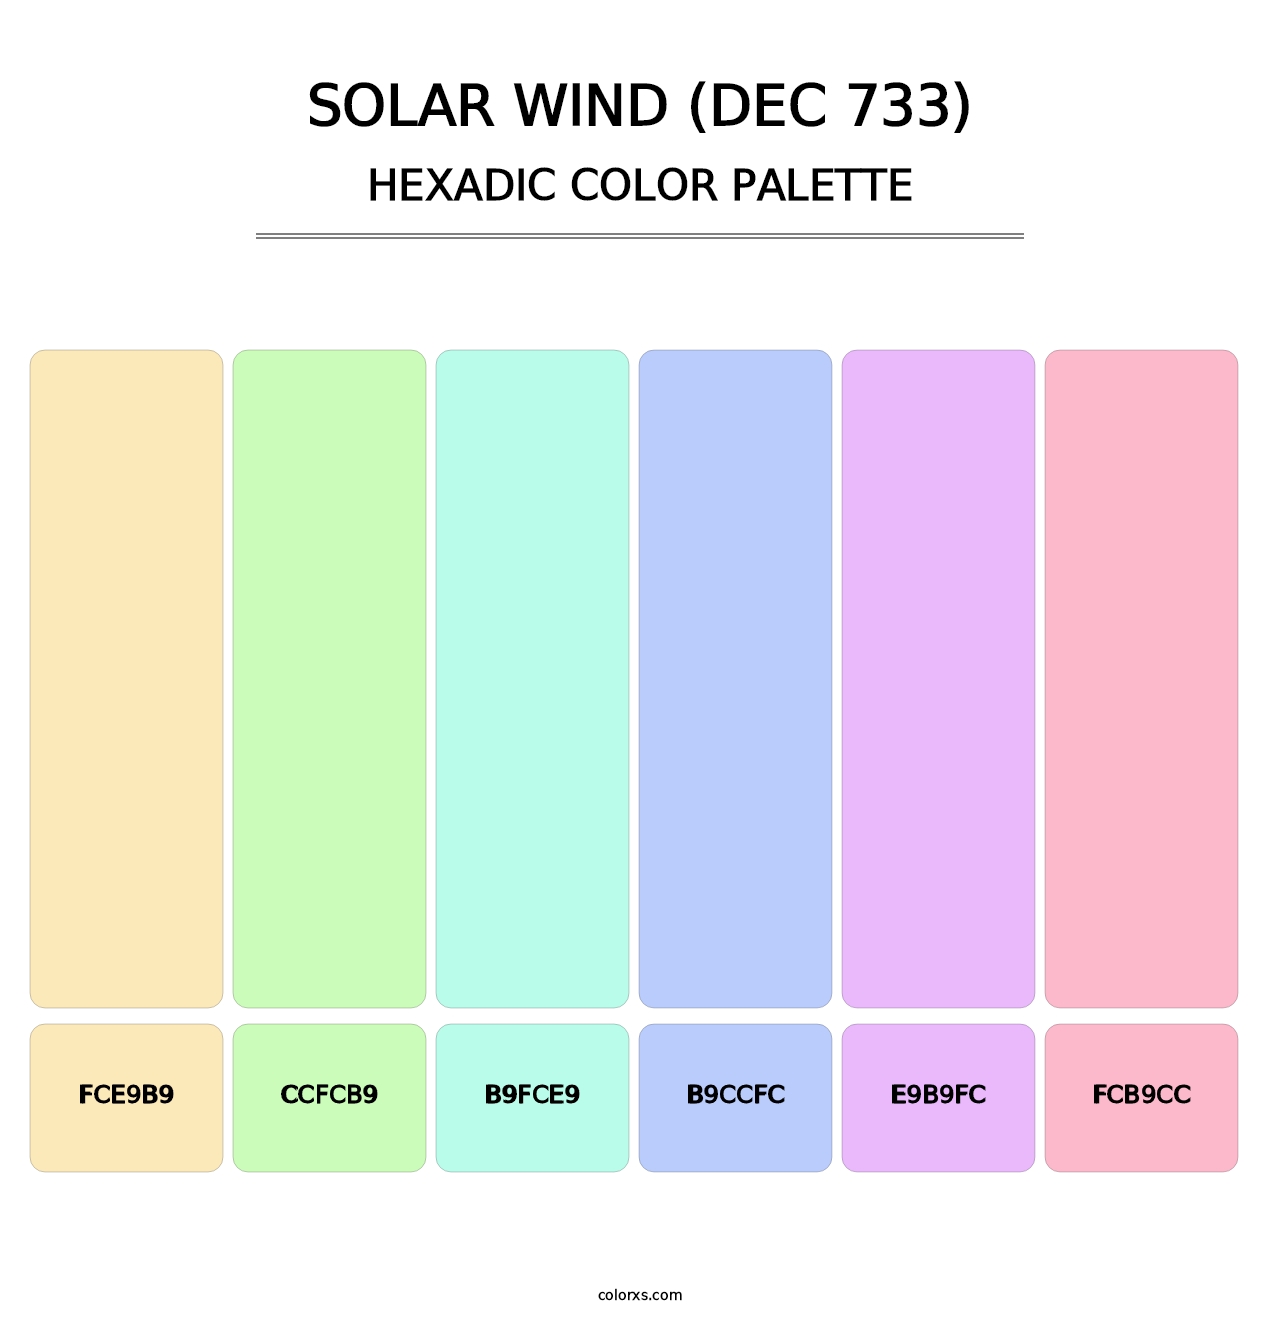 Solar Wind (DEC 733) - Hexadic Color Palette